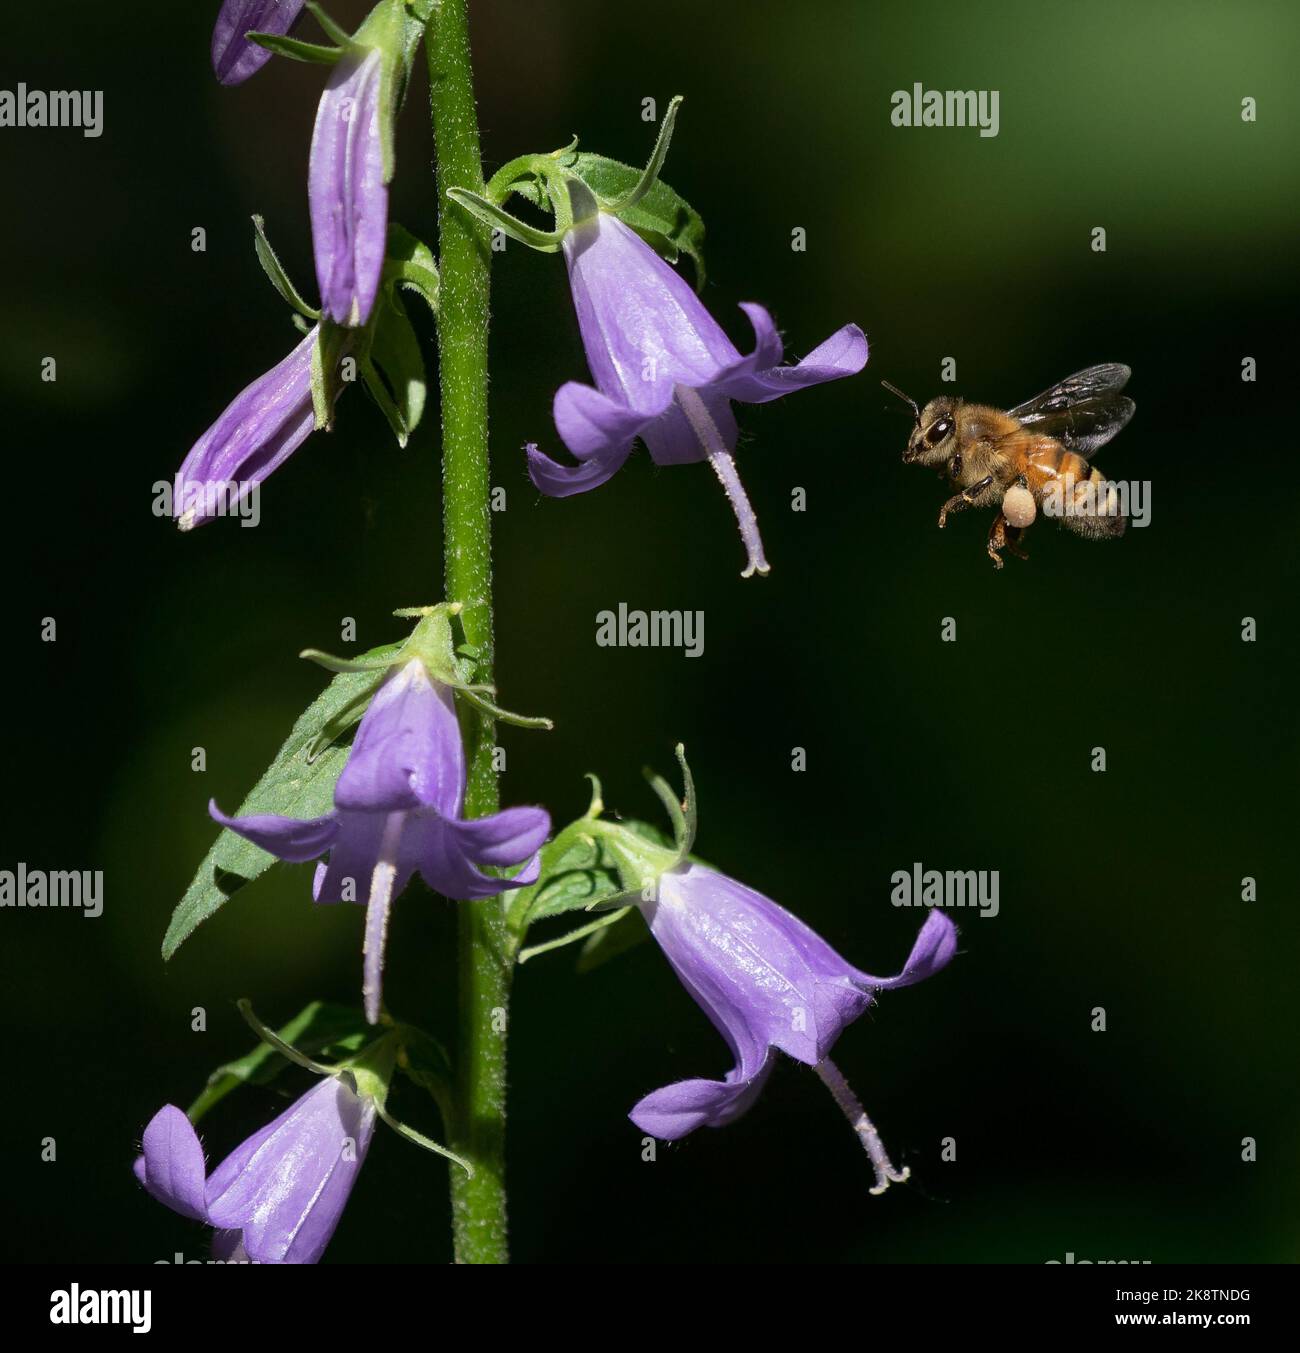 A Honeybee in flight next to a Creeping Bellflower stalk carrying a hefty pollen basket with a dark garden background. Stock Photo